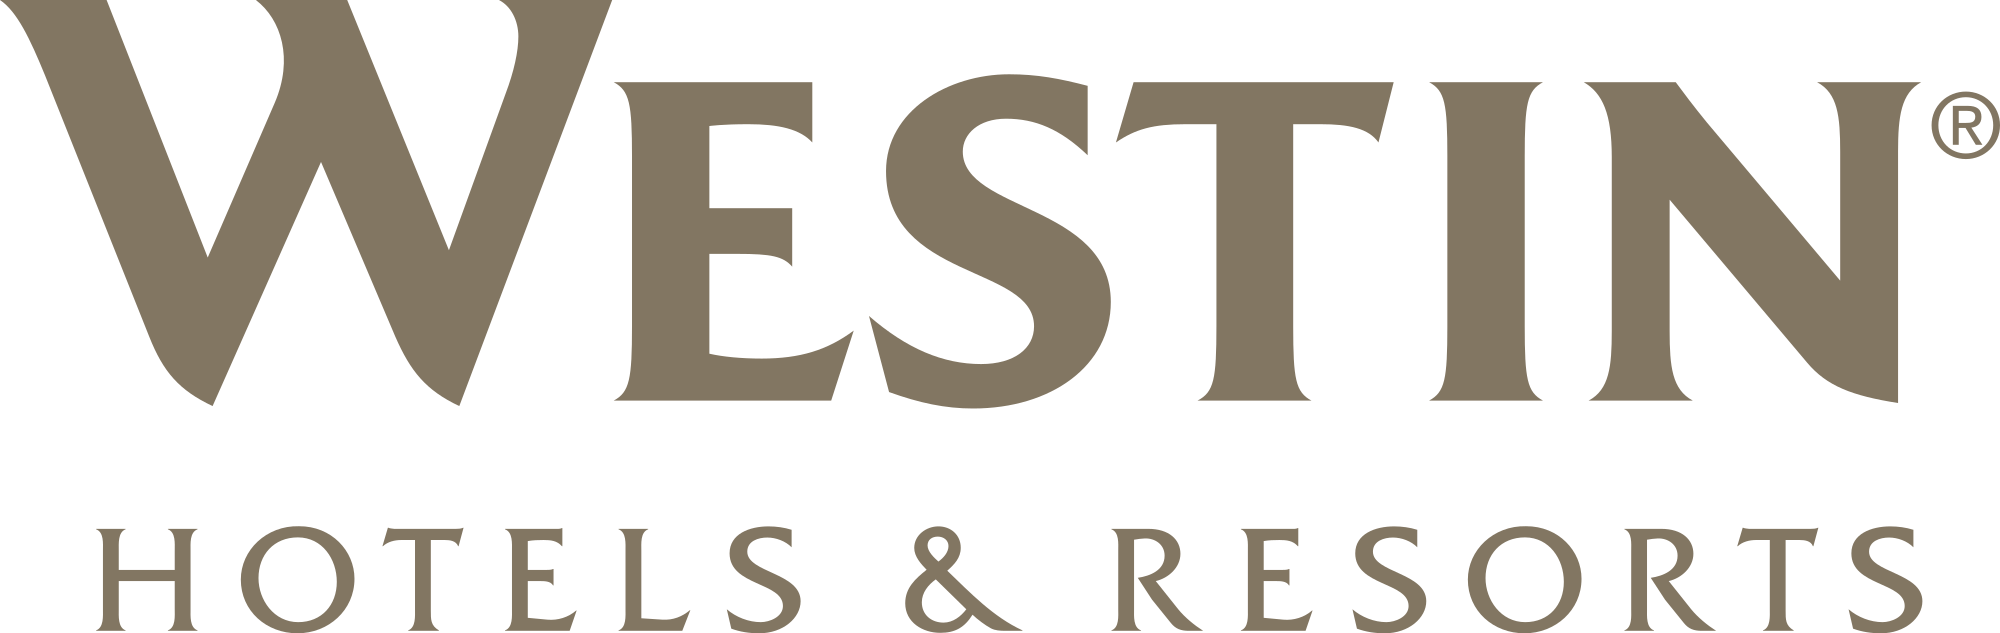 2000px-Westin_Hotels_&_Resorts_logo.svg.png